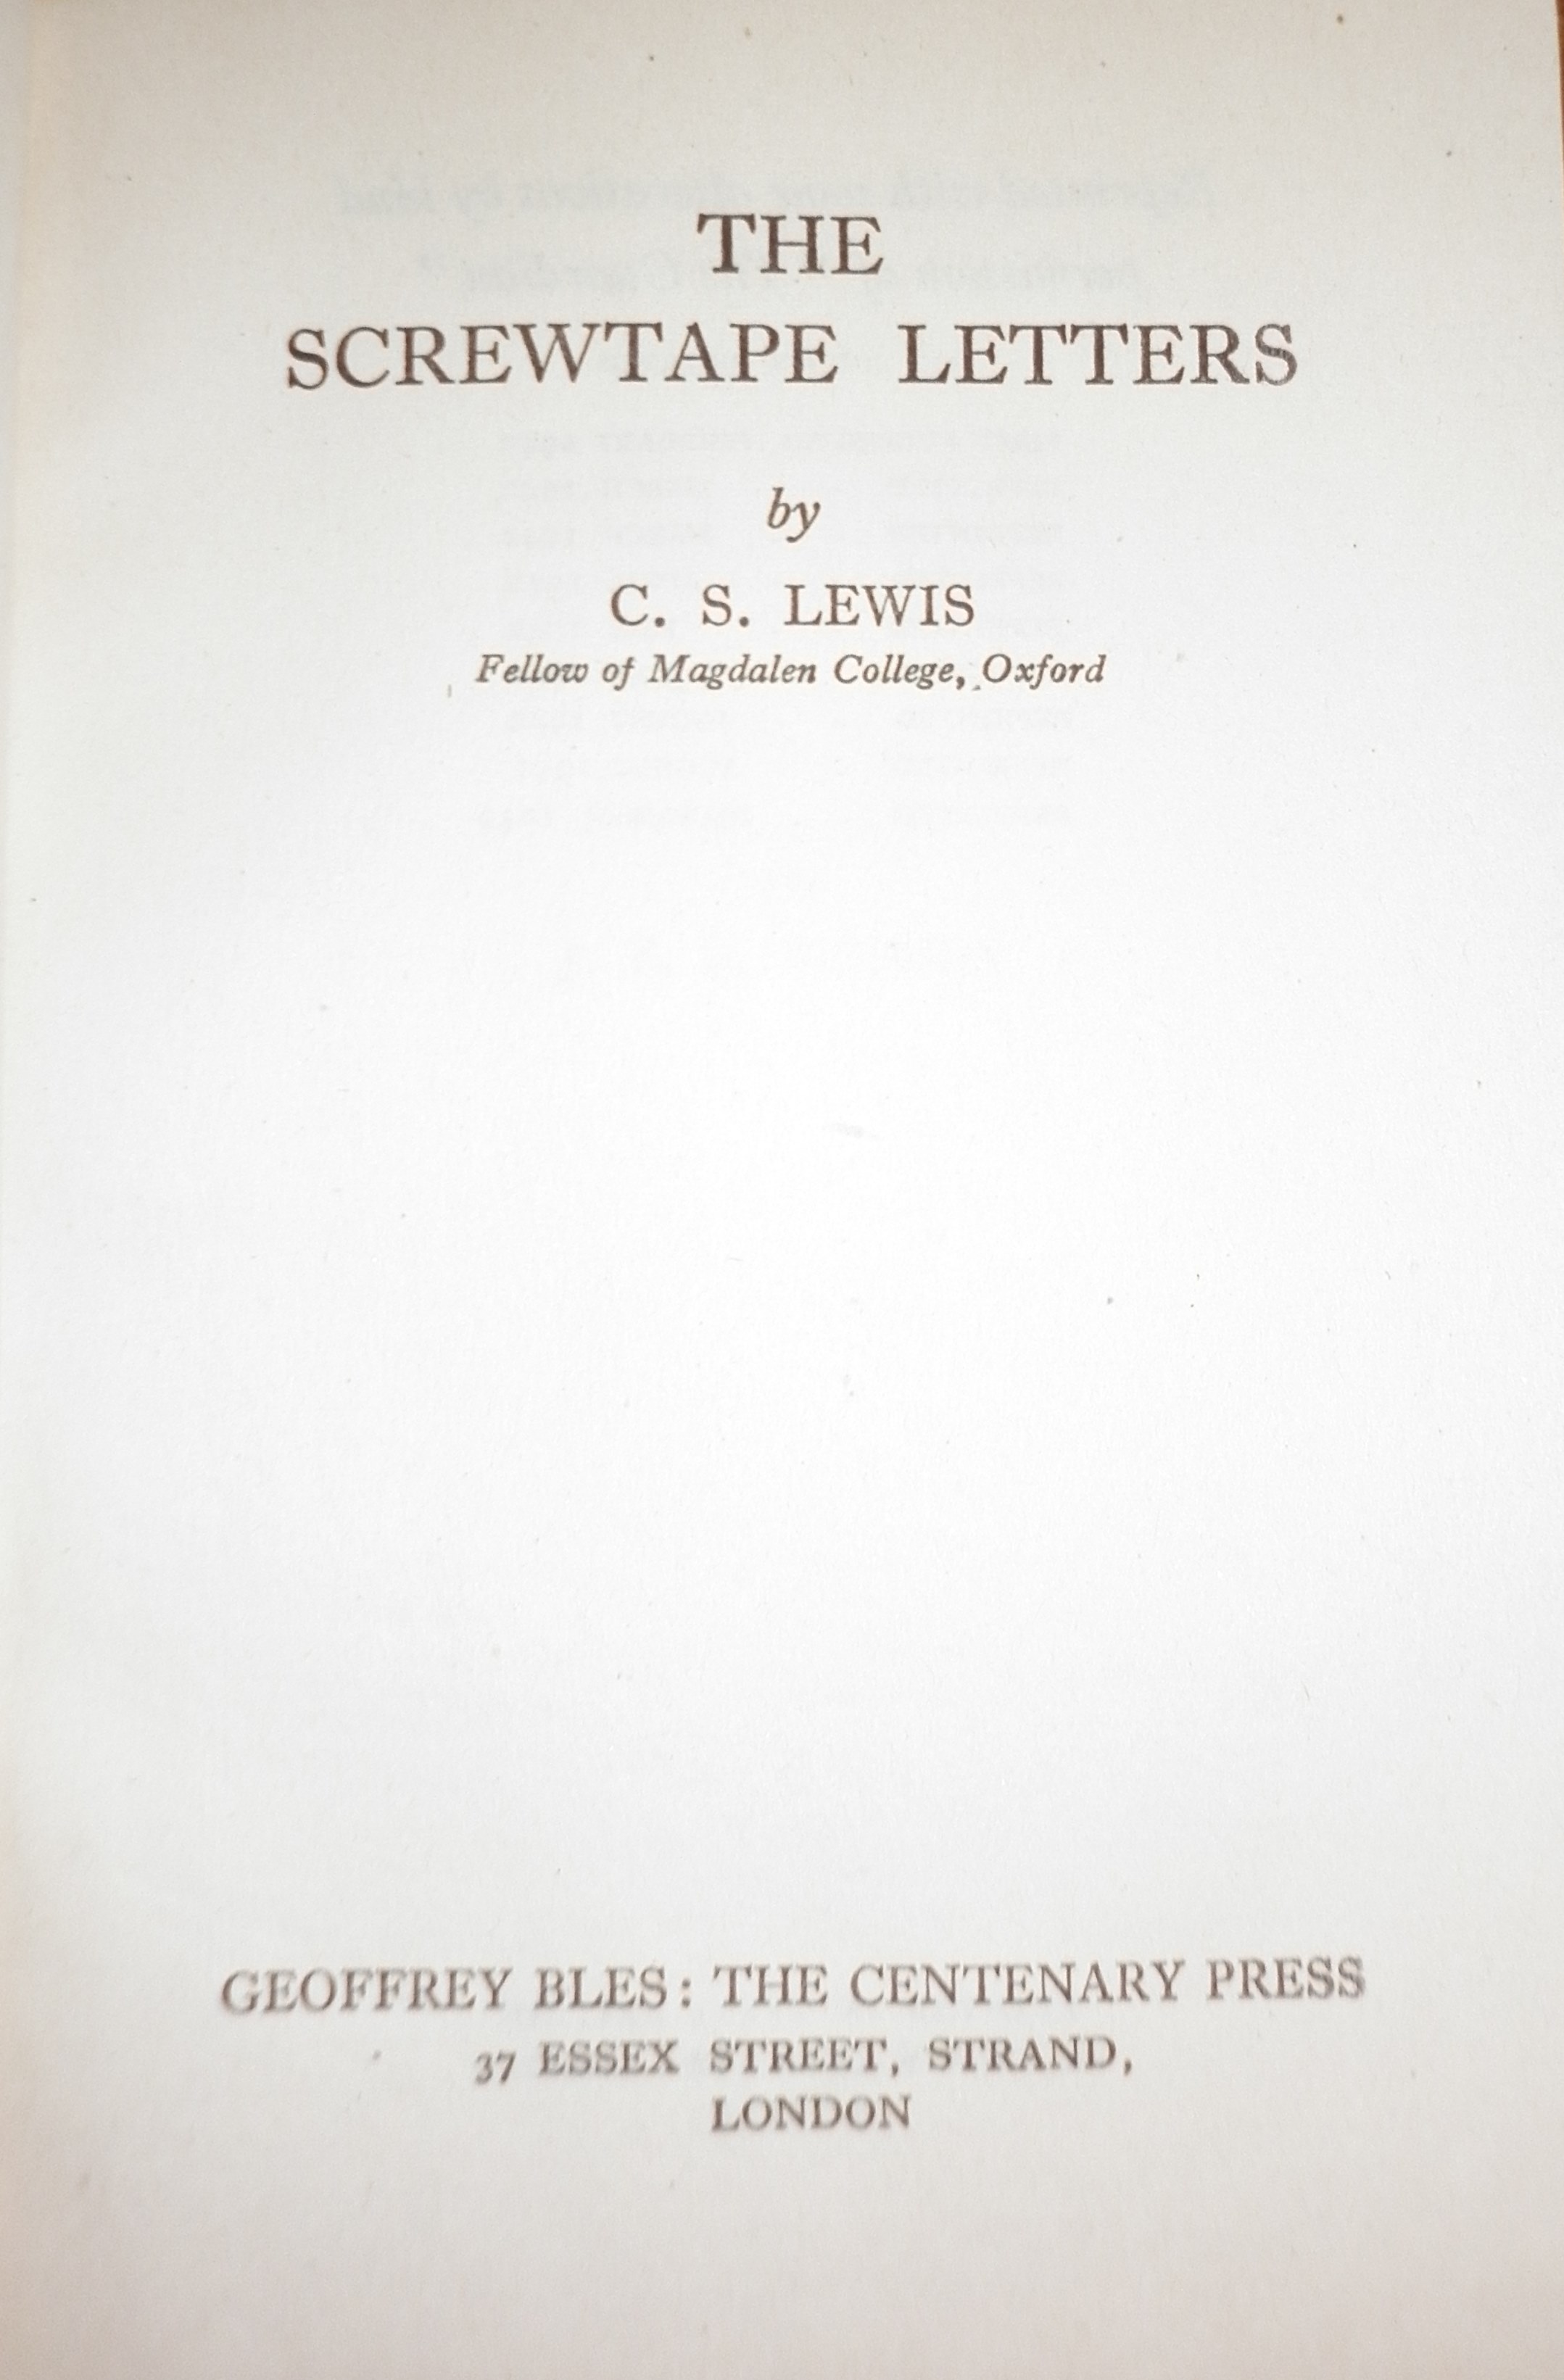 The Screwtape Letters by C.S. Lewis 1942 (Dec) pub The Centenary Press dustwrapper - Image 2 of 3